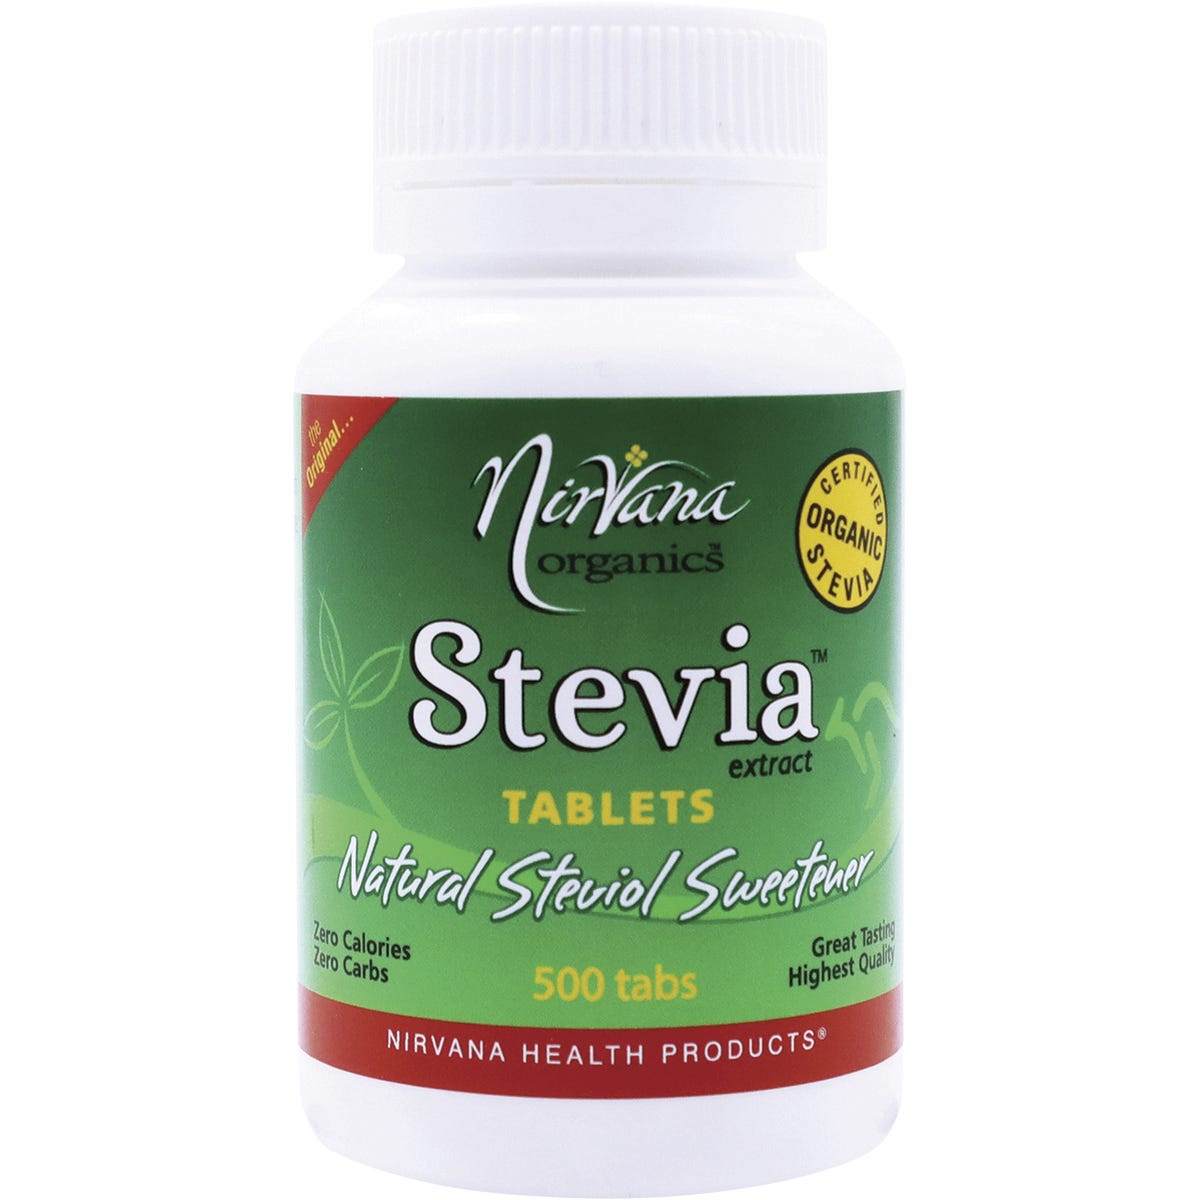 Nirvana Organics Stevia Tablets 500 Tabs - Dr Earth - Sweeteners